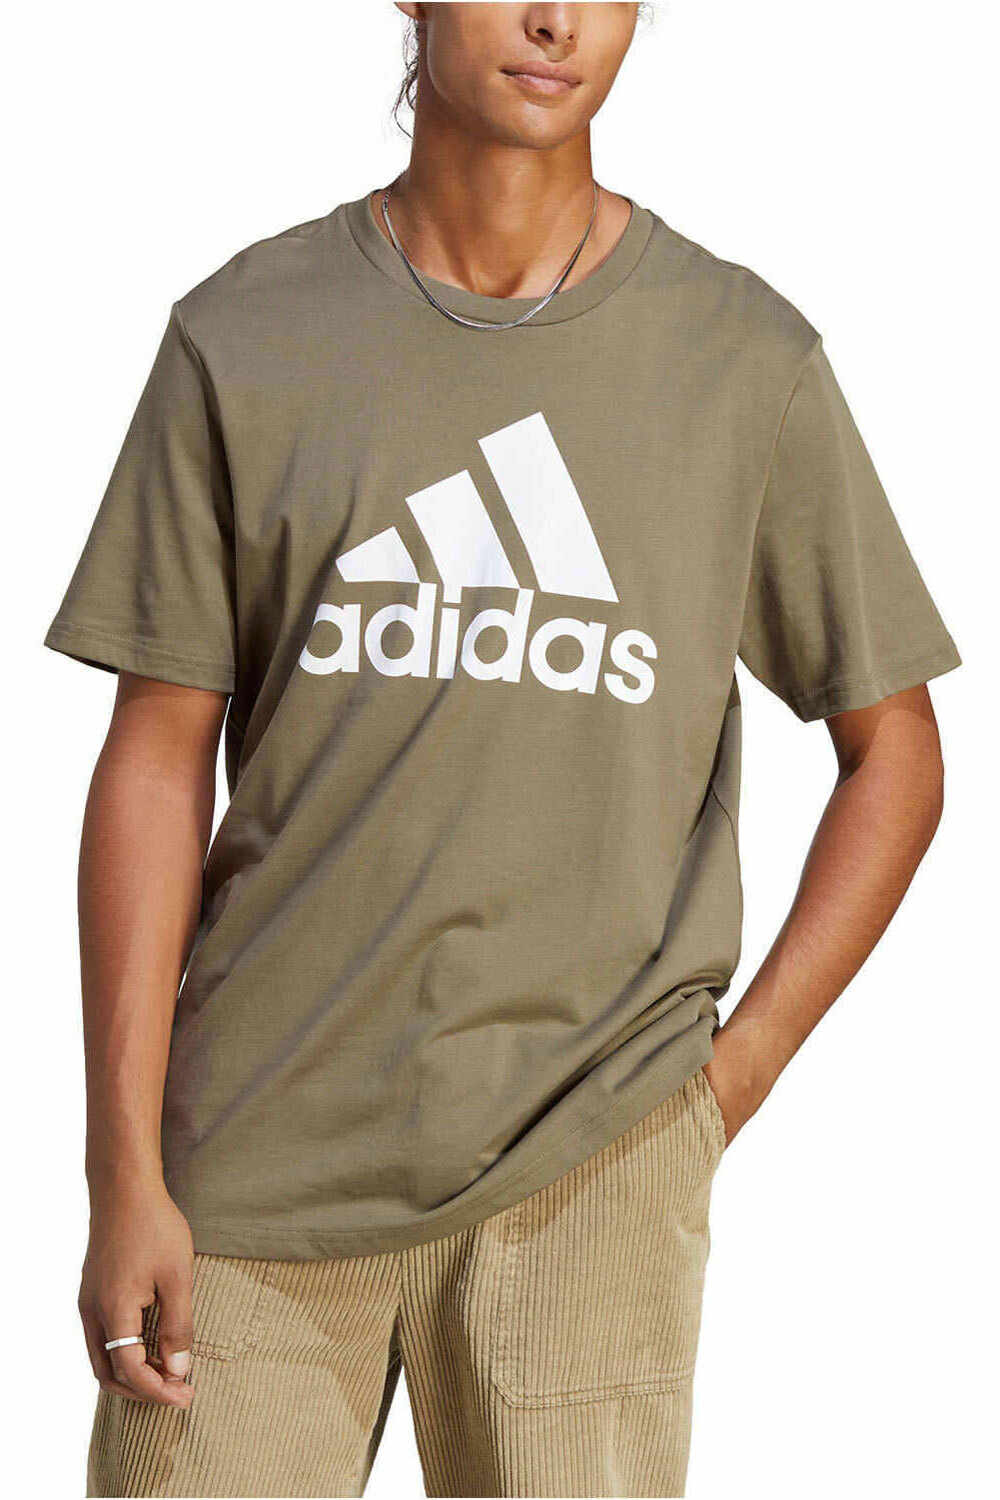 adidas camiseta manga corta hombre Essentials Single Big Logo vista frontal